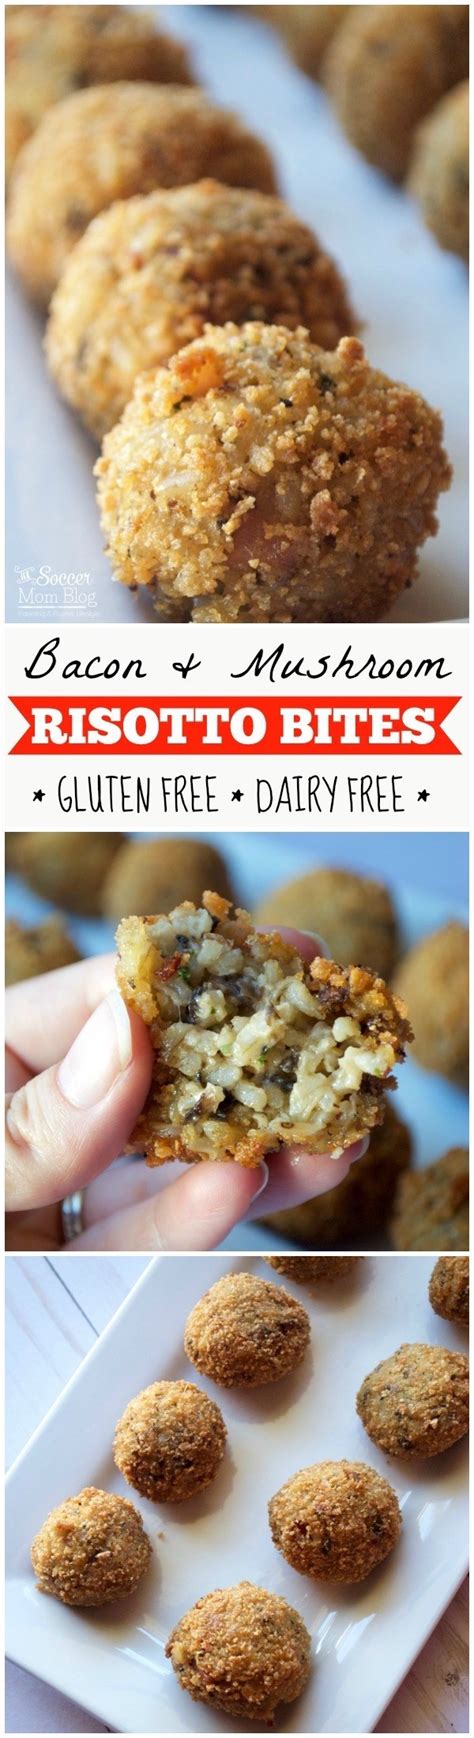 Serve with veggies, bread, tortilla chips or pita bread. Bacon & Mushroom Risotto Bites (gluten free, dairy free ...